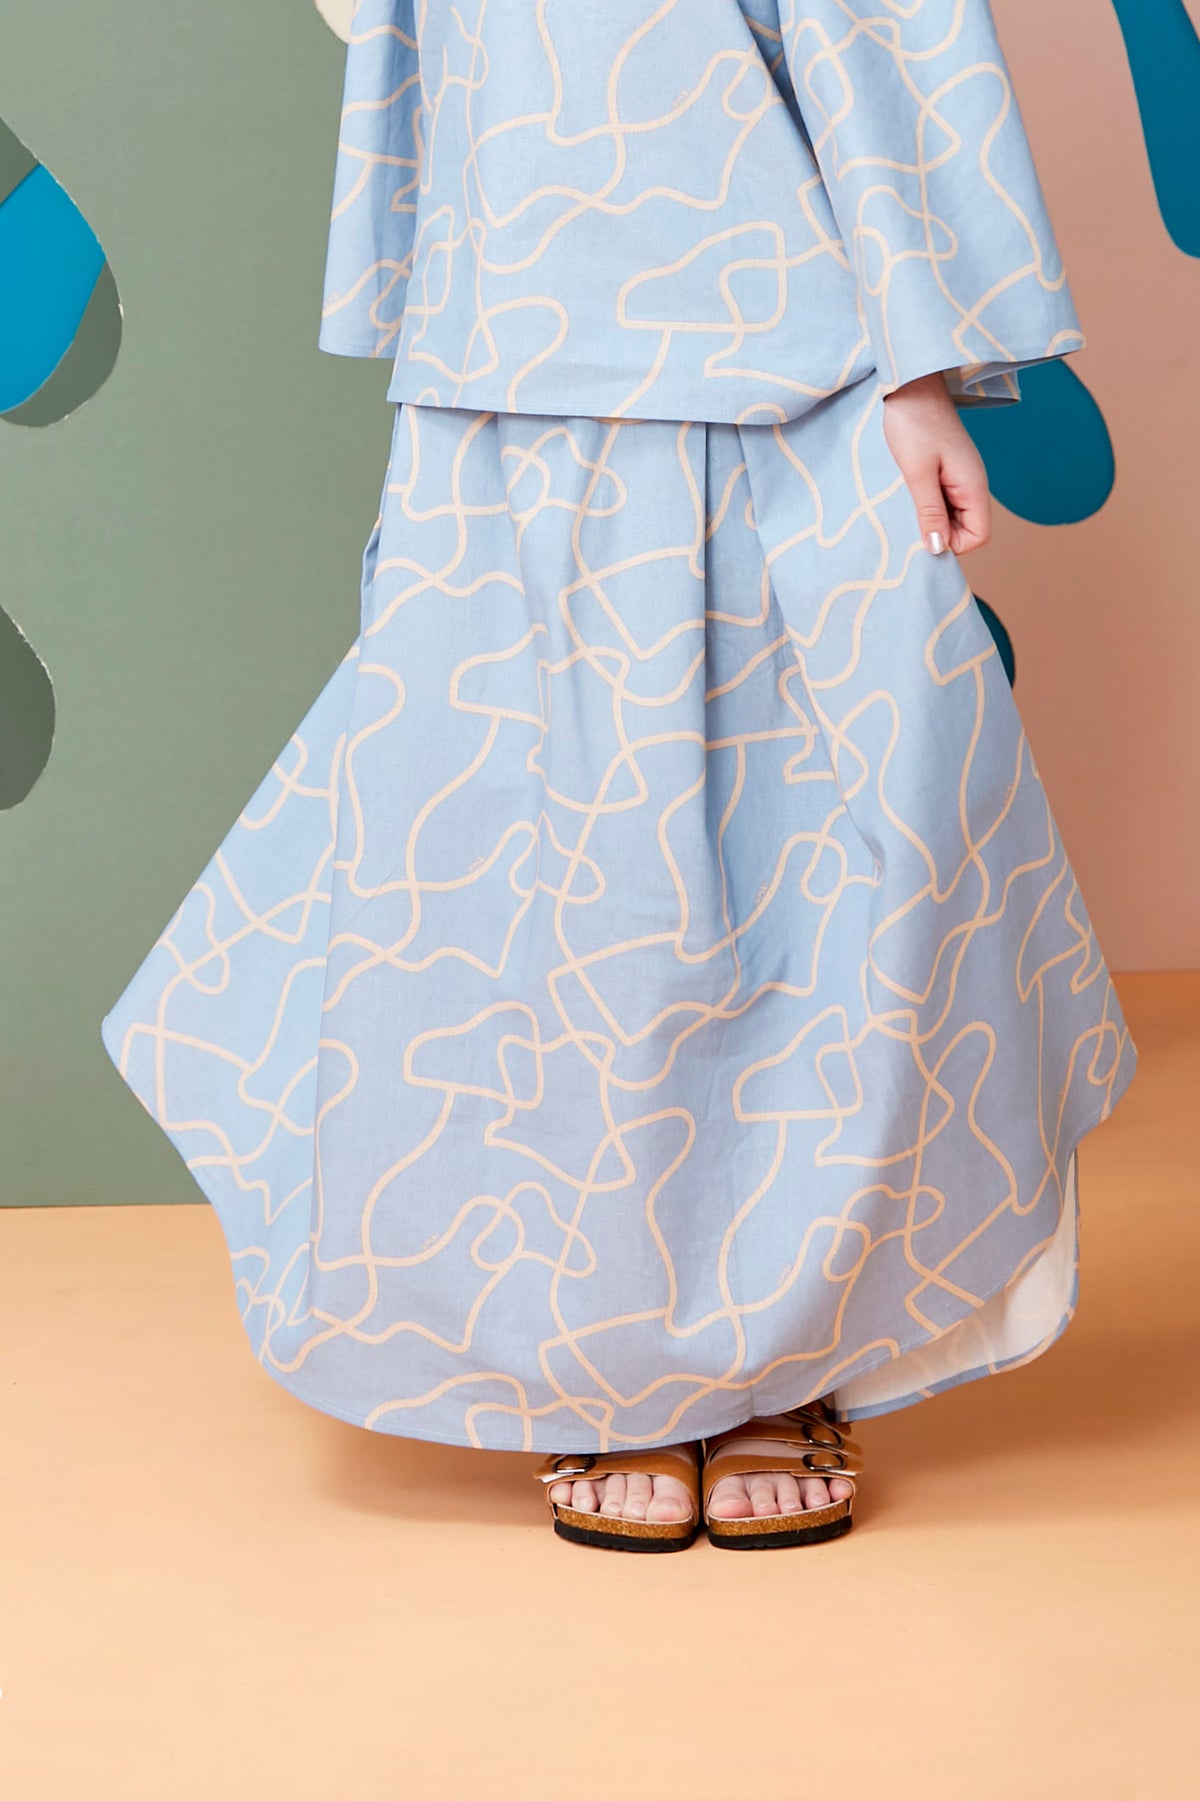 baju raya family sedondon kids girls teacup skirt flow